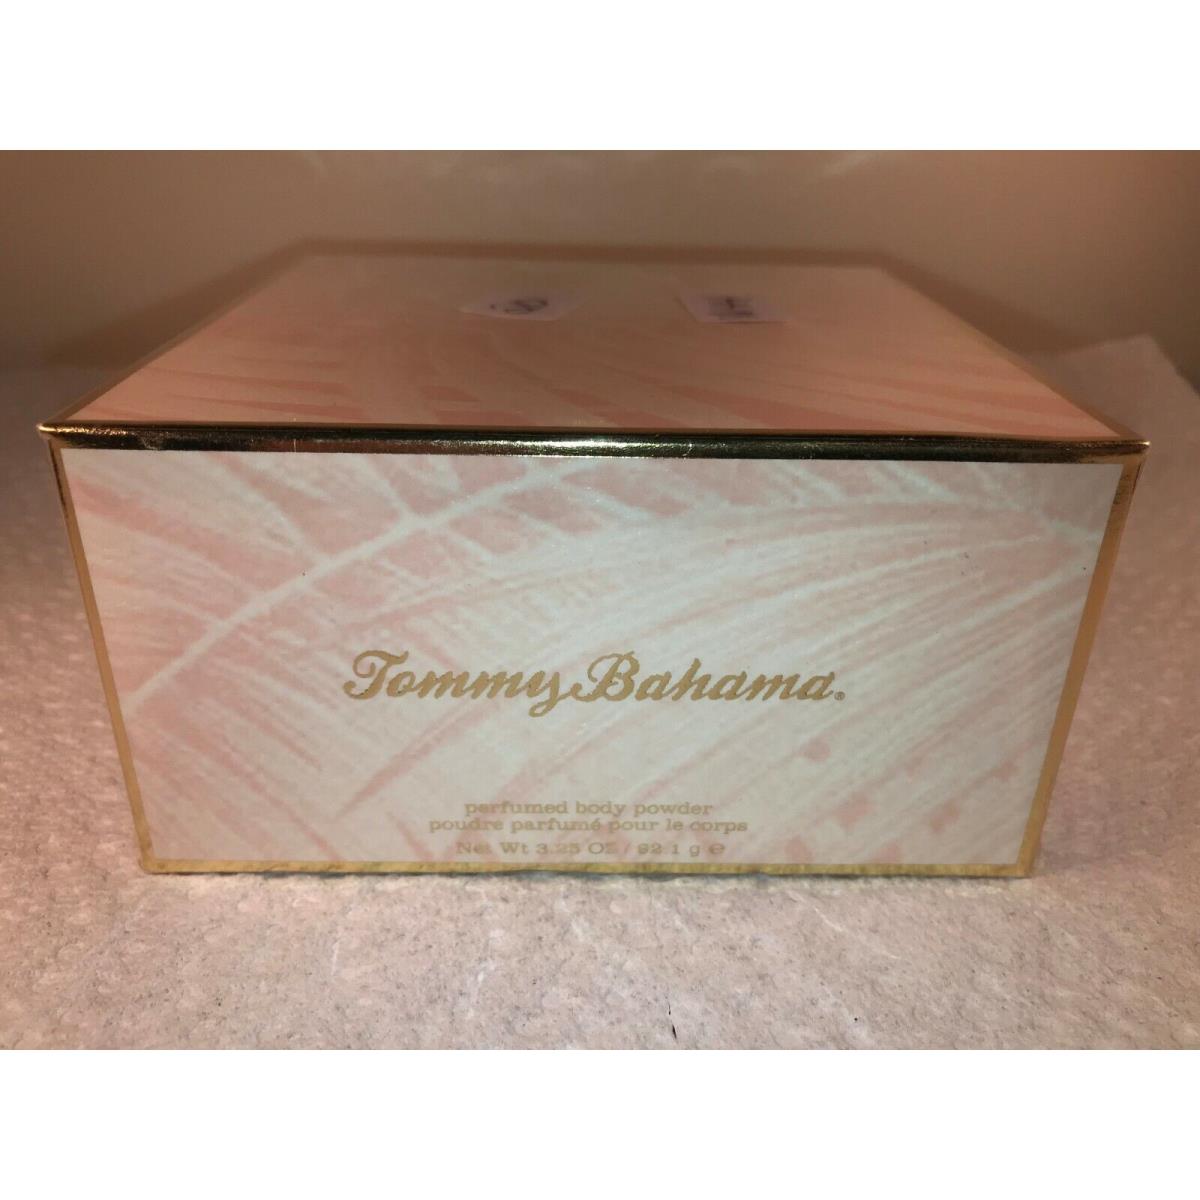 Tommy Bahama Perfumed Body Powder 3.25 OZ Boxed A26